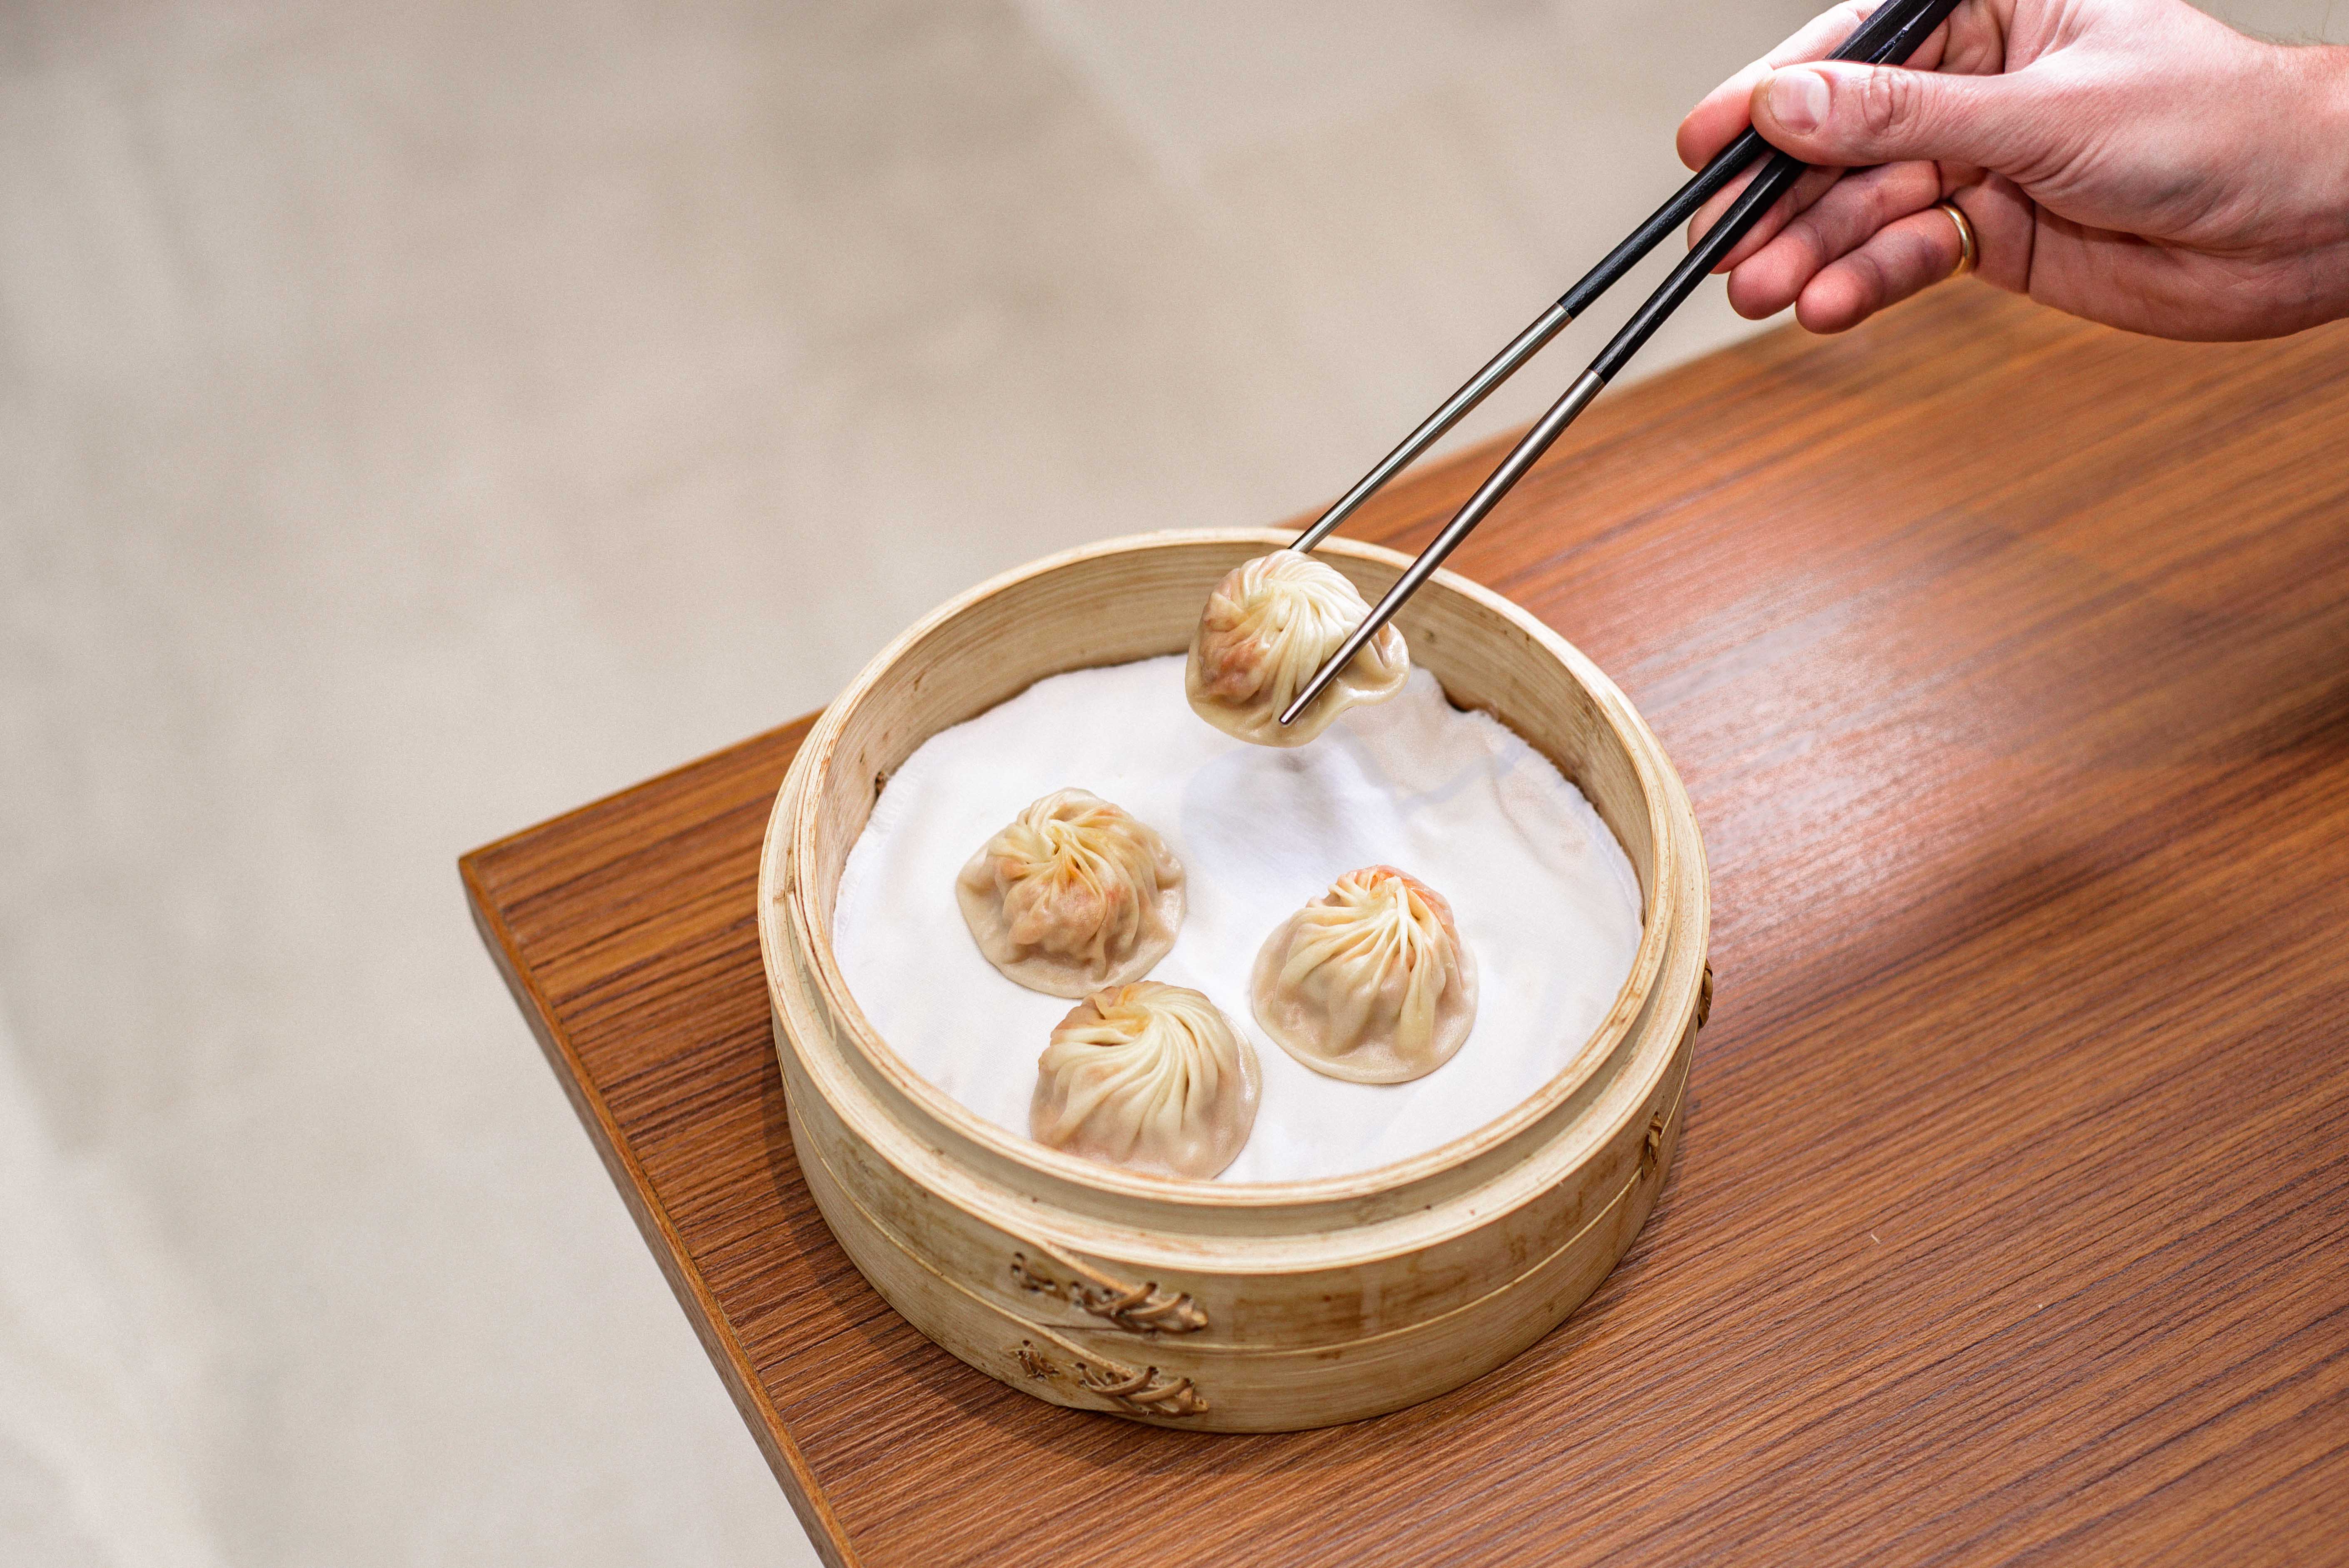 Din Tai Fung’s xiaolongbao dumplings let down food critic Tim Hayward at world-famous dumpling chain restaurant in London